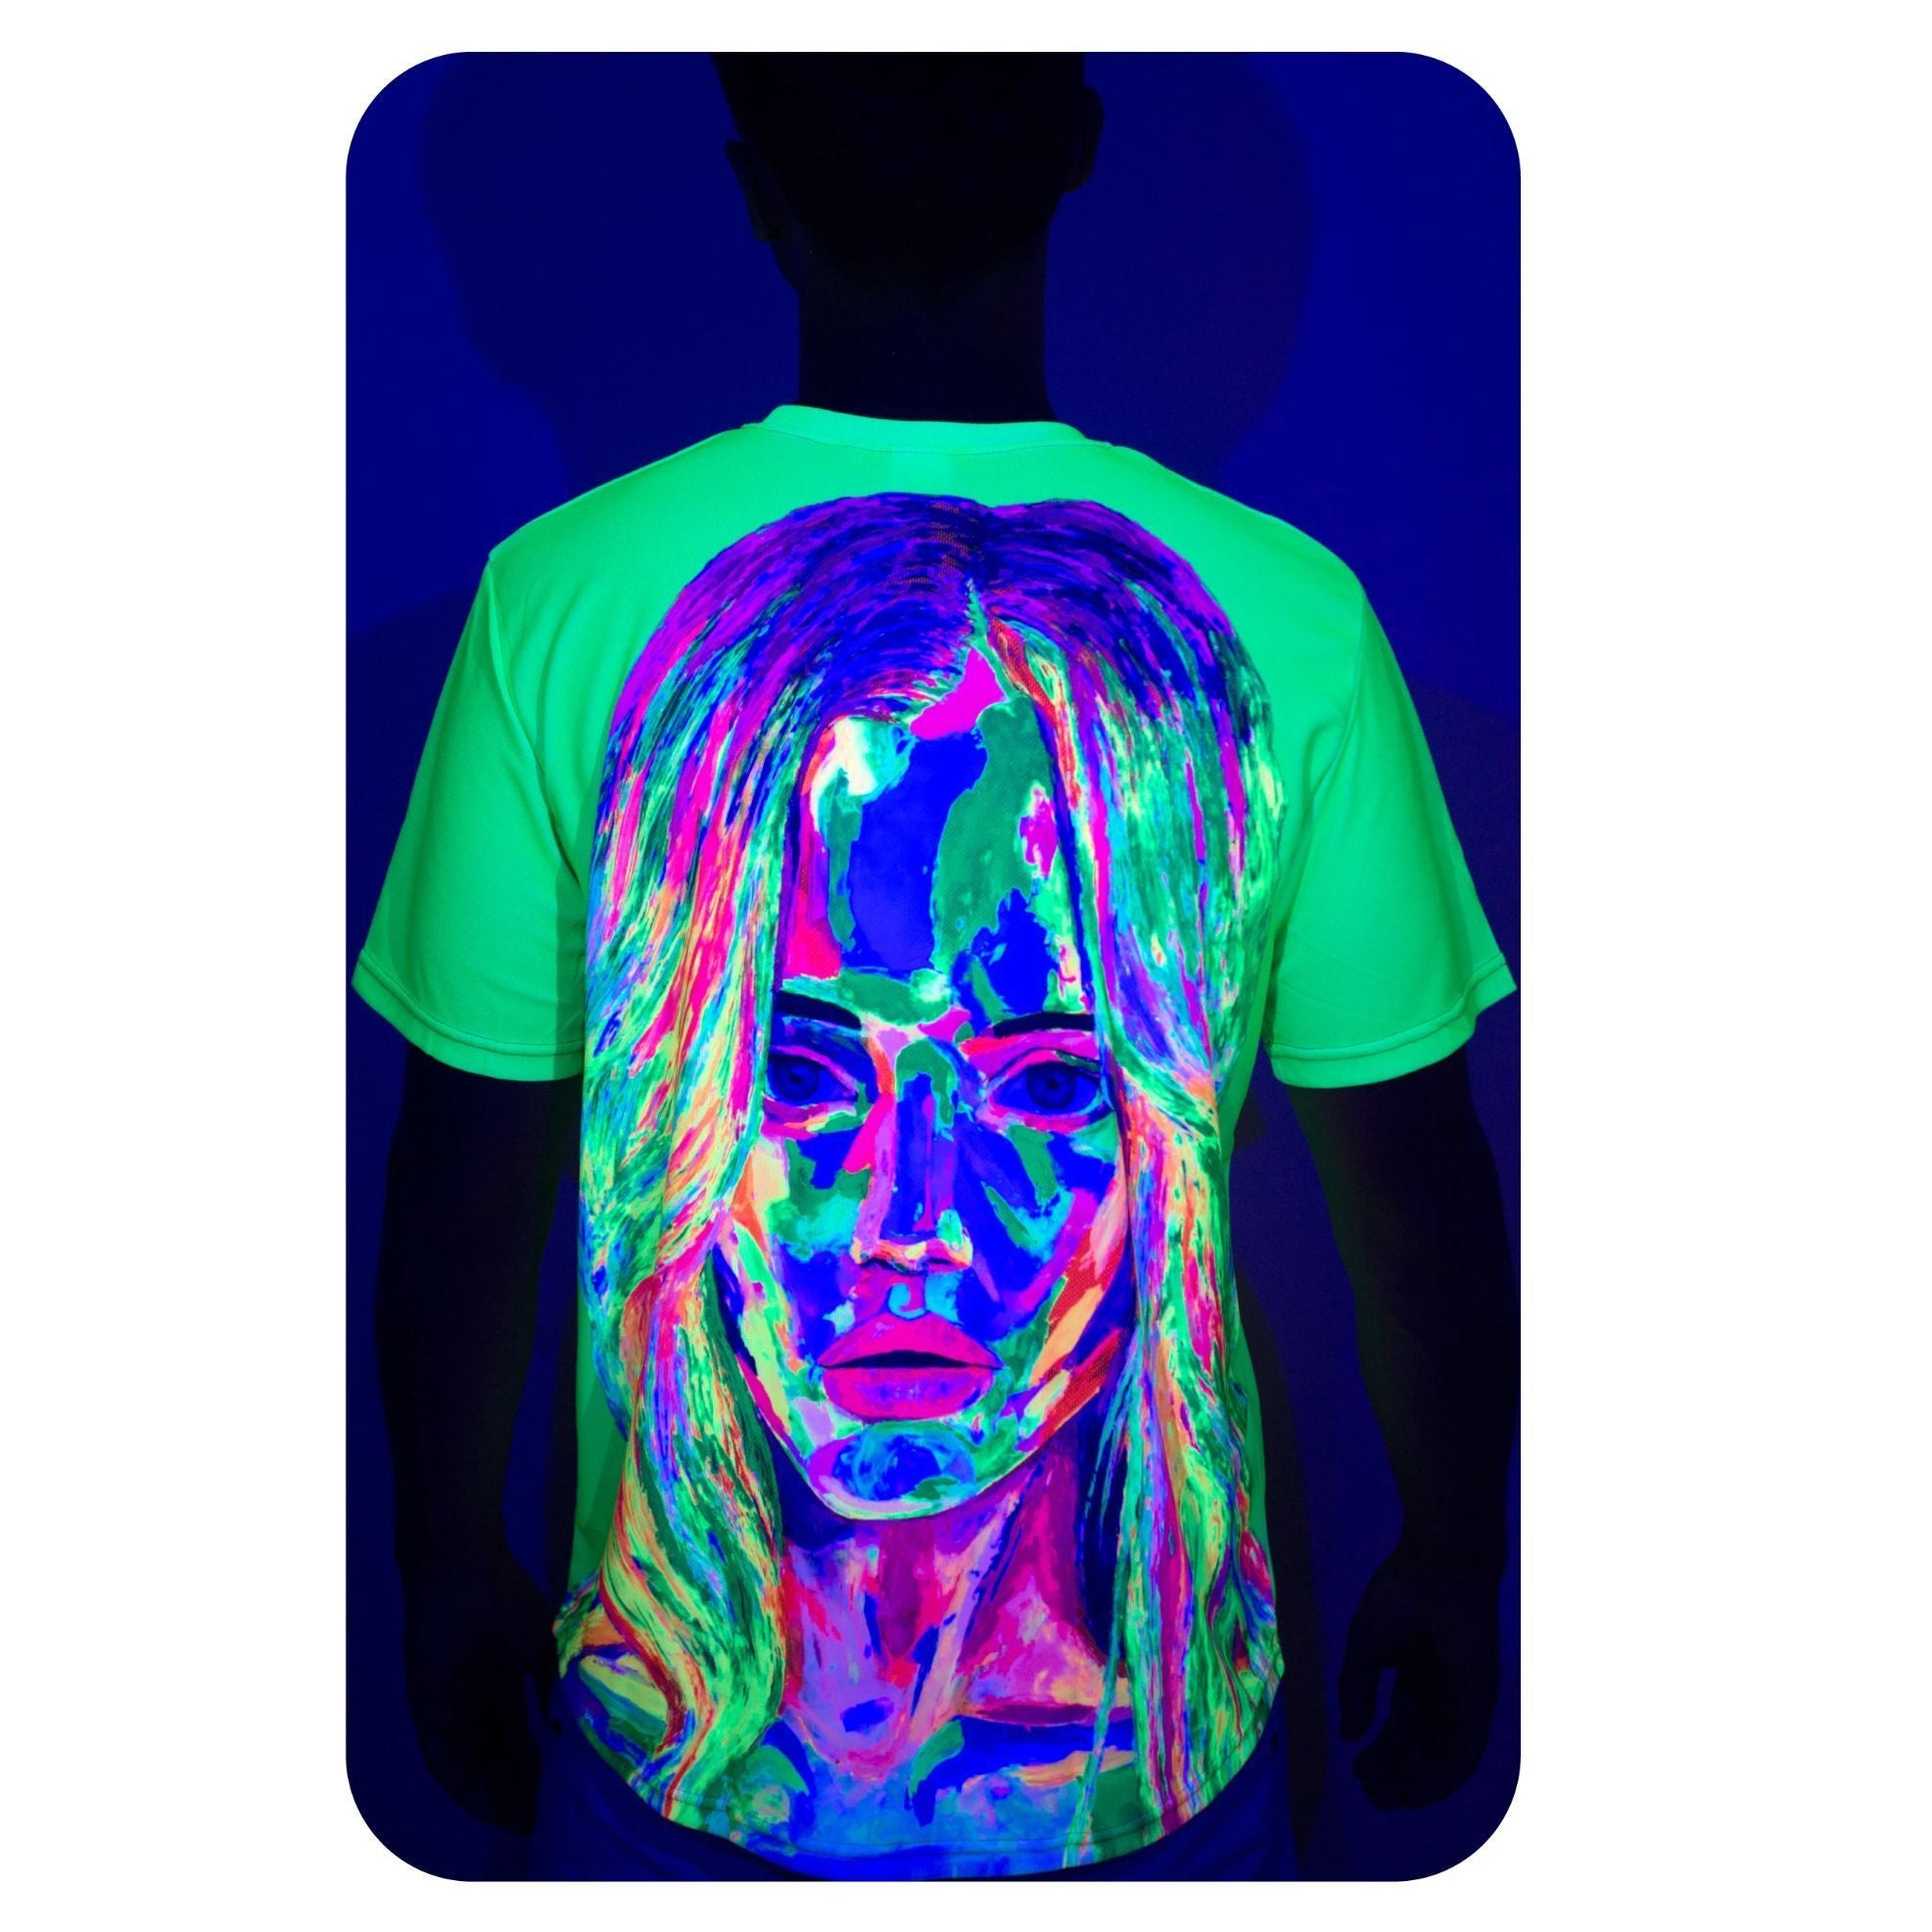 Neon Pink Tee Shirt Men Glow in Ultraviolet Fluorescent Obramovich ts11